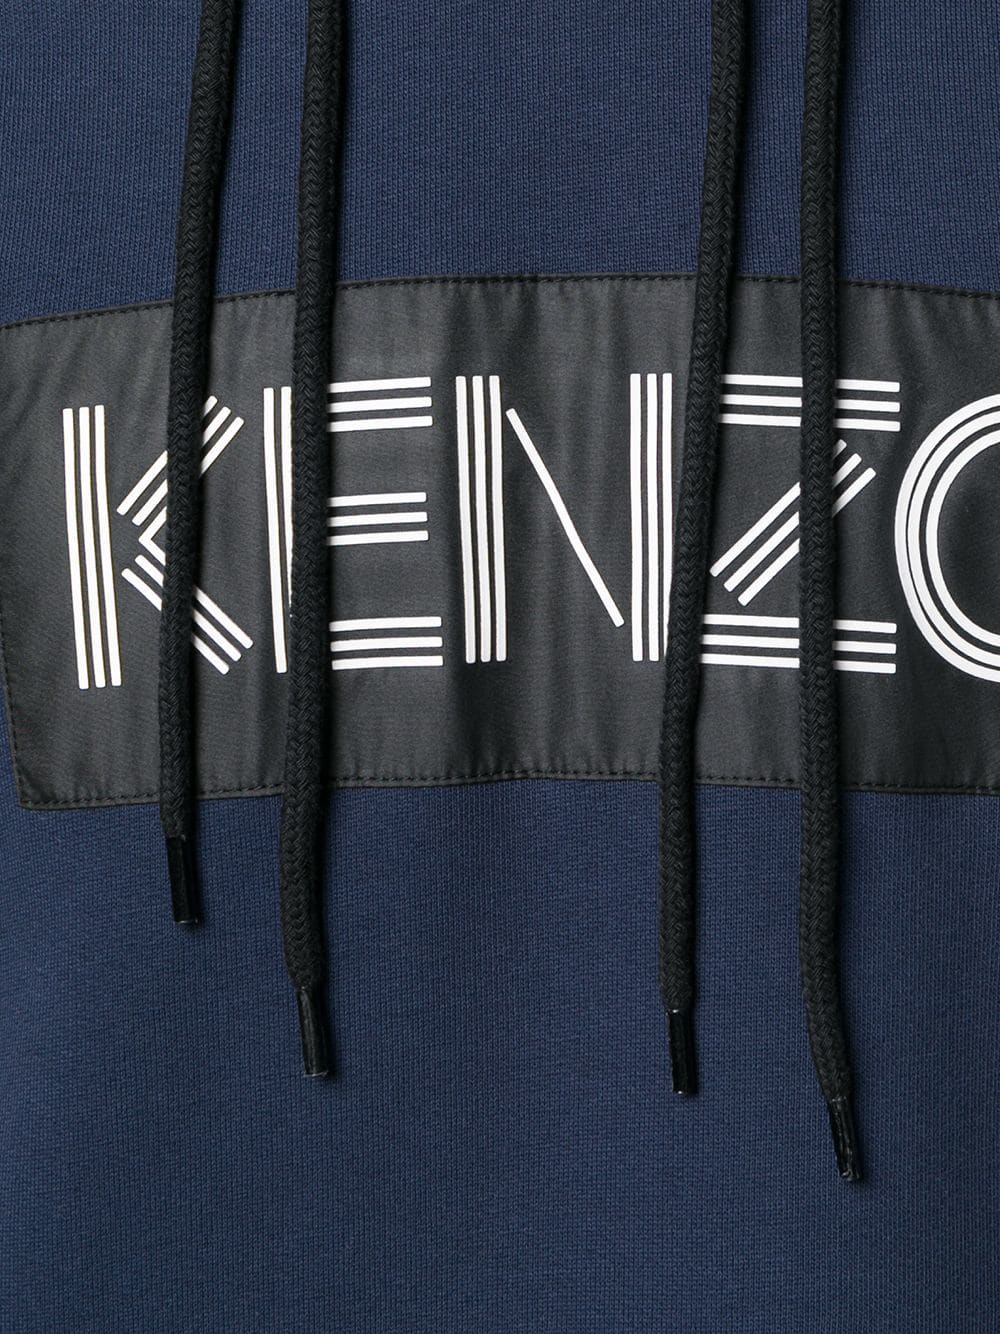 KENZO SWEATSHIRT F865SW4144MD 78-Libas Trendy Fashion Store